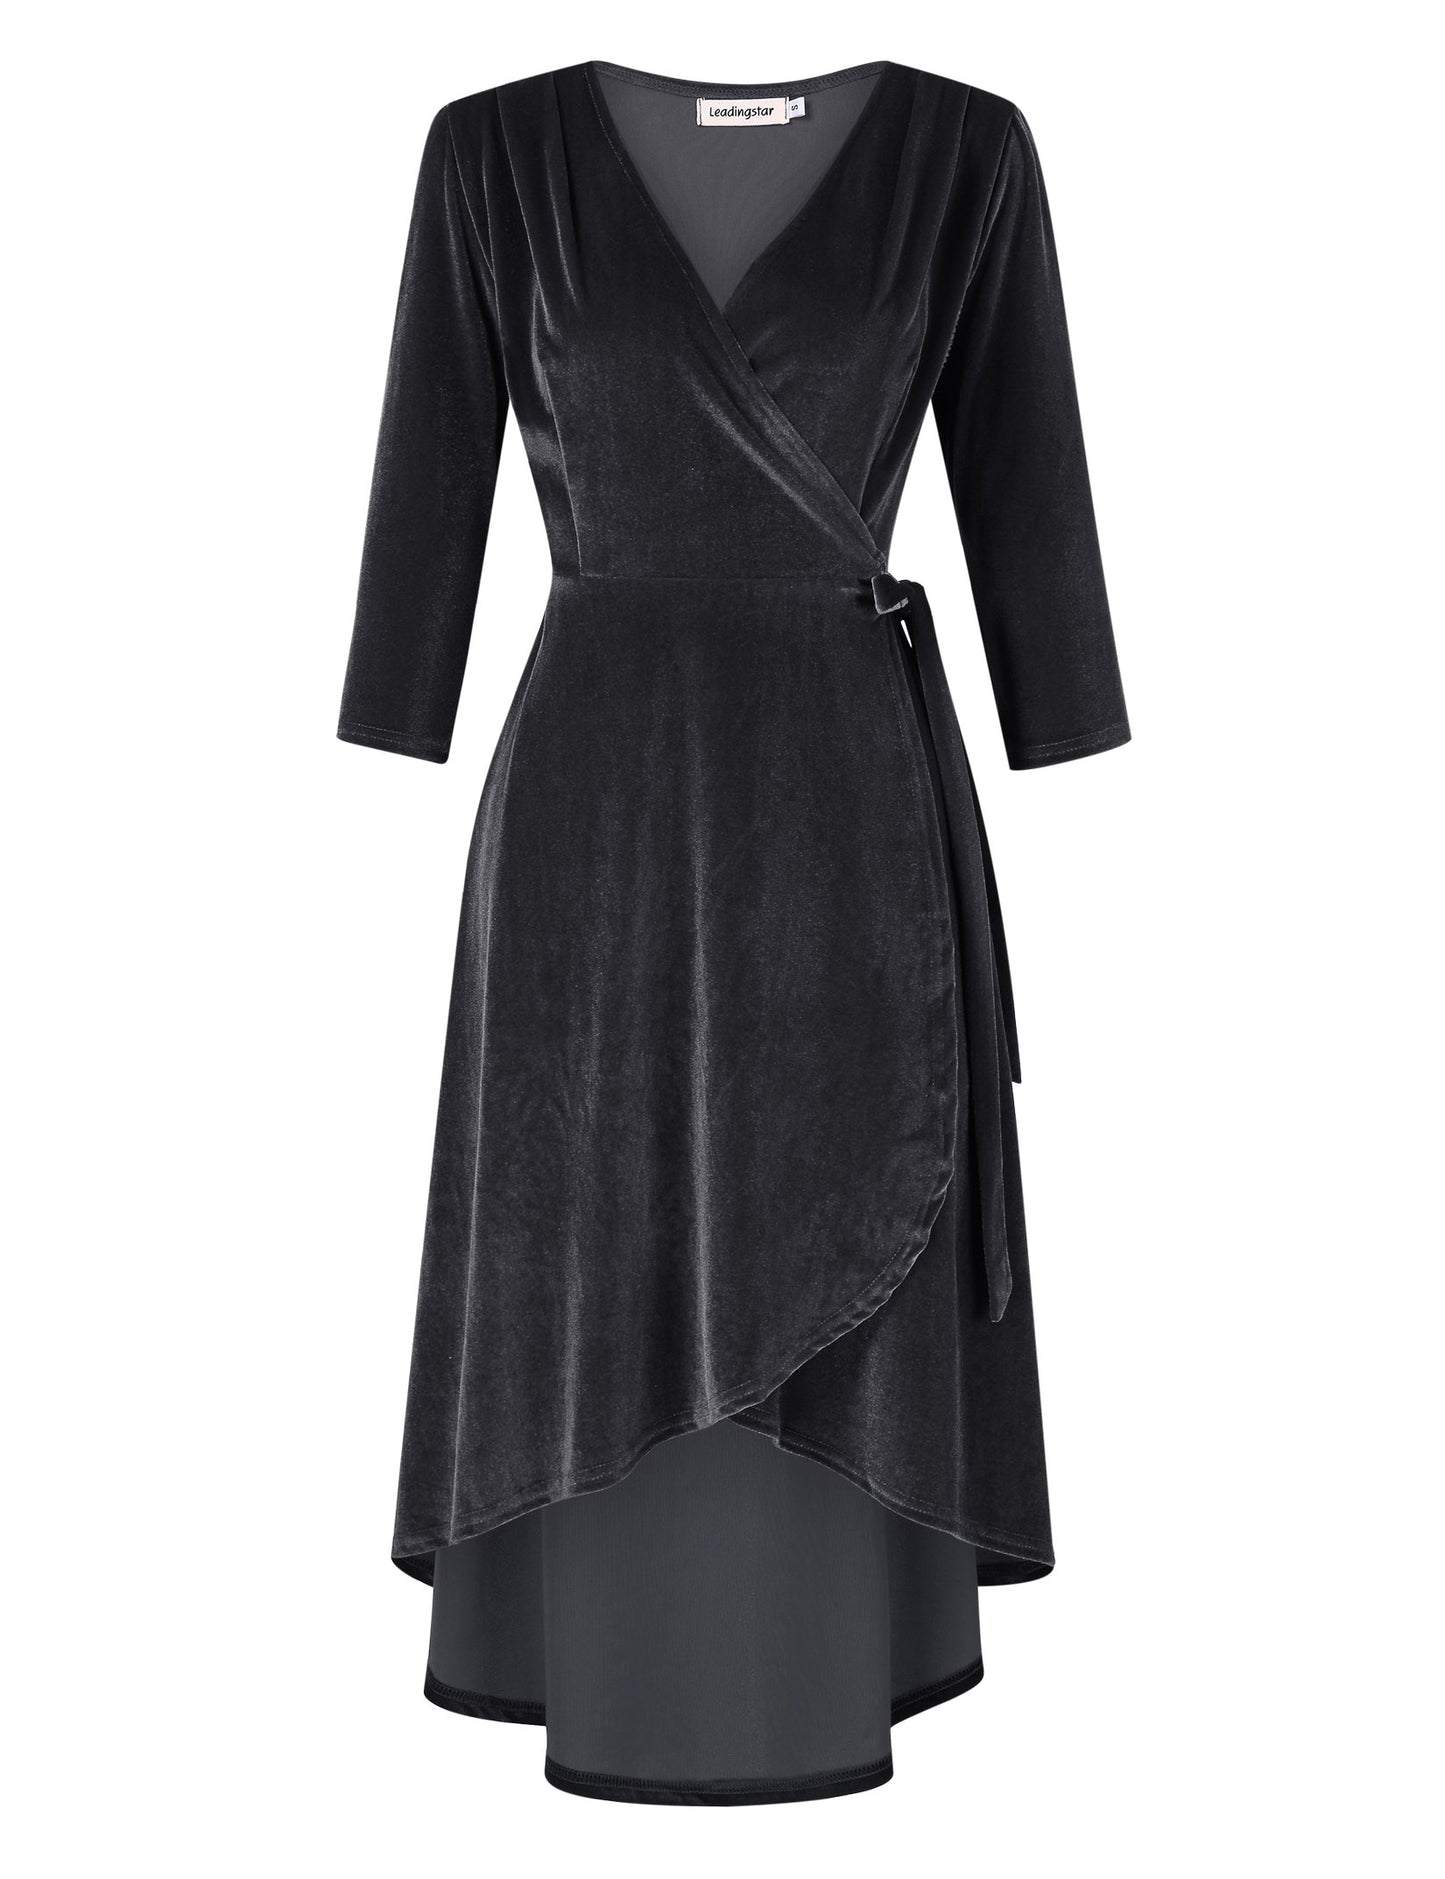 YESFASHION Women's Velvet V-Neck Long Sleeve Casual Party Dress Grey